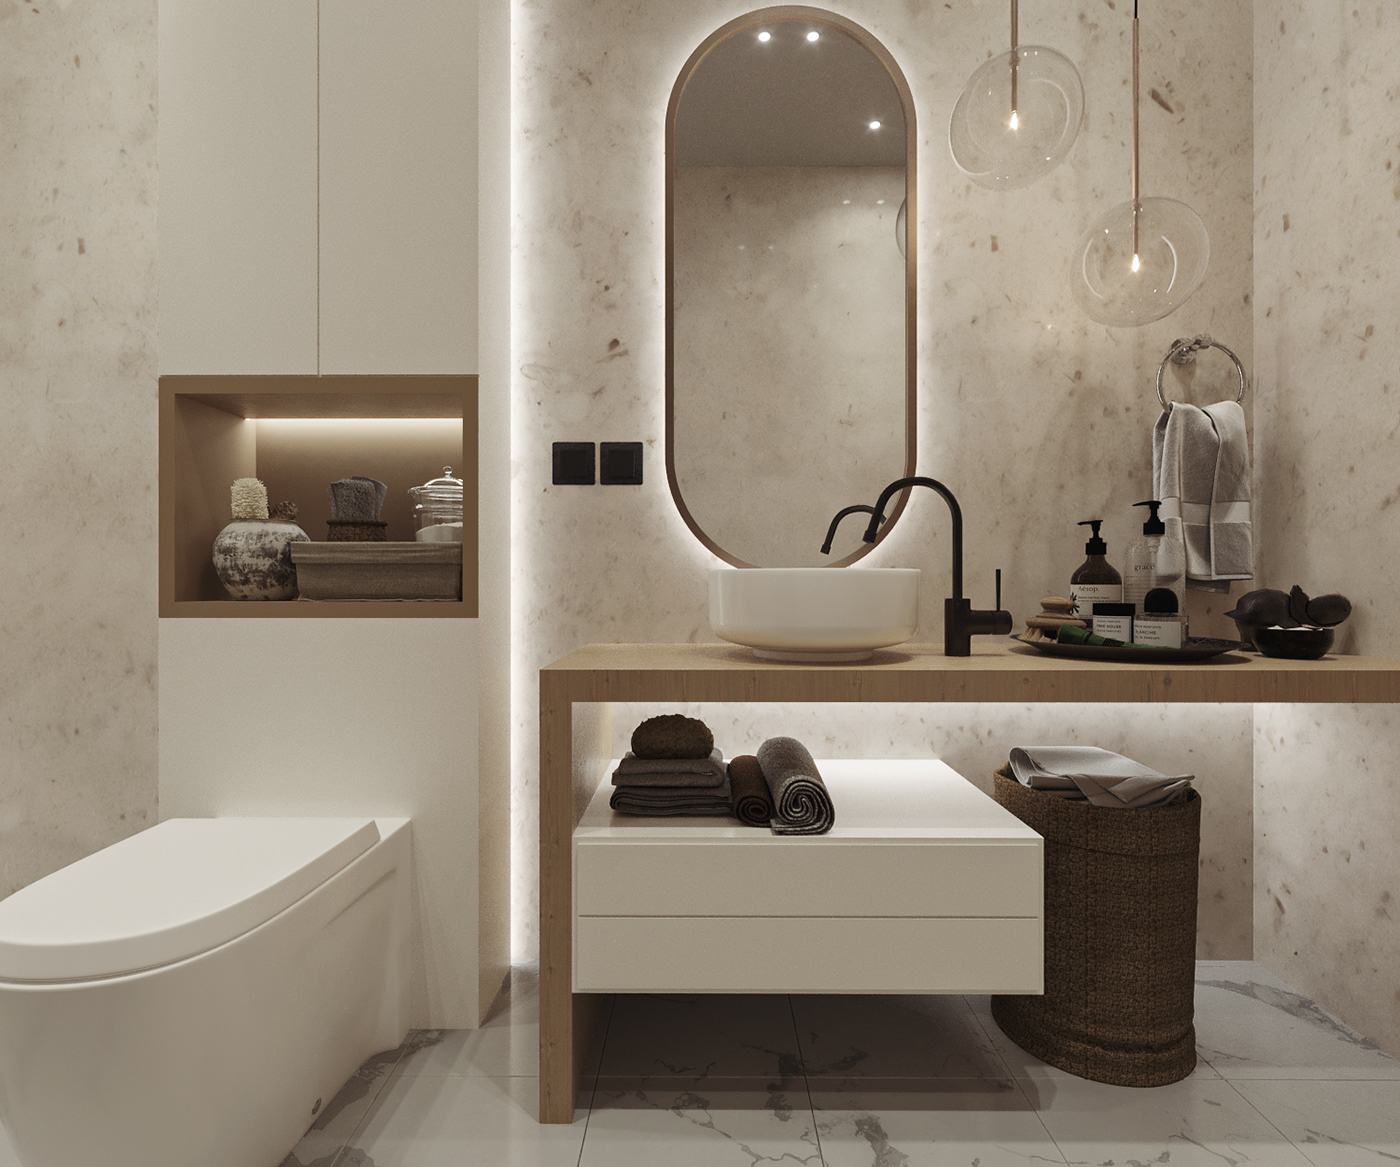 3ds max bathroom CGI corona render  elegant interior design  luxury modern